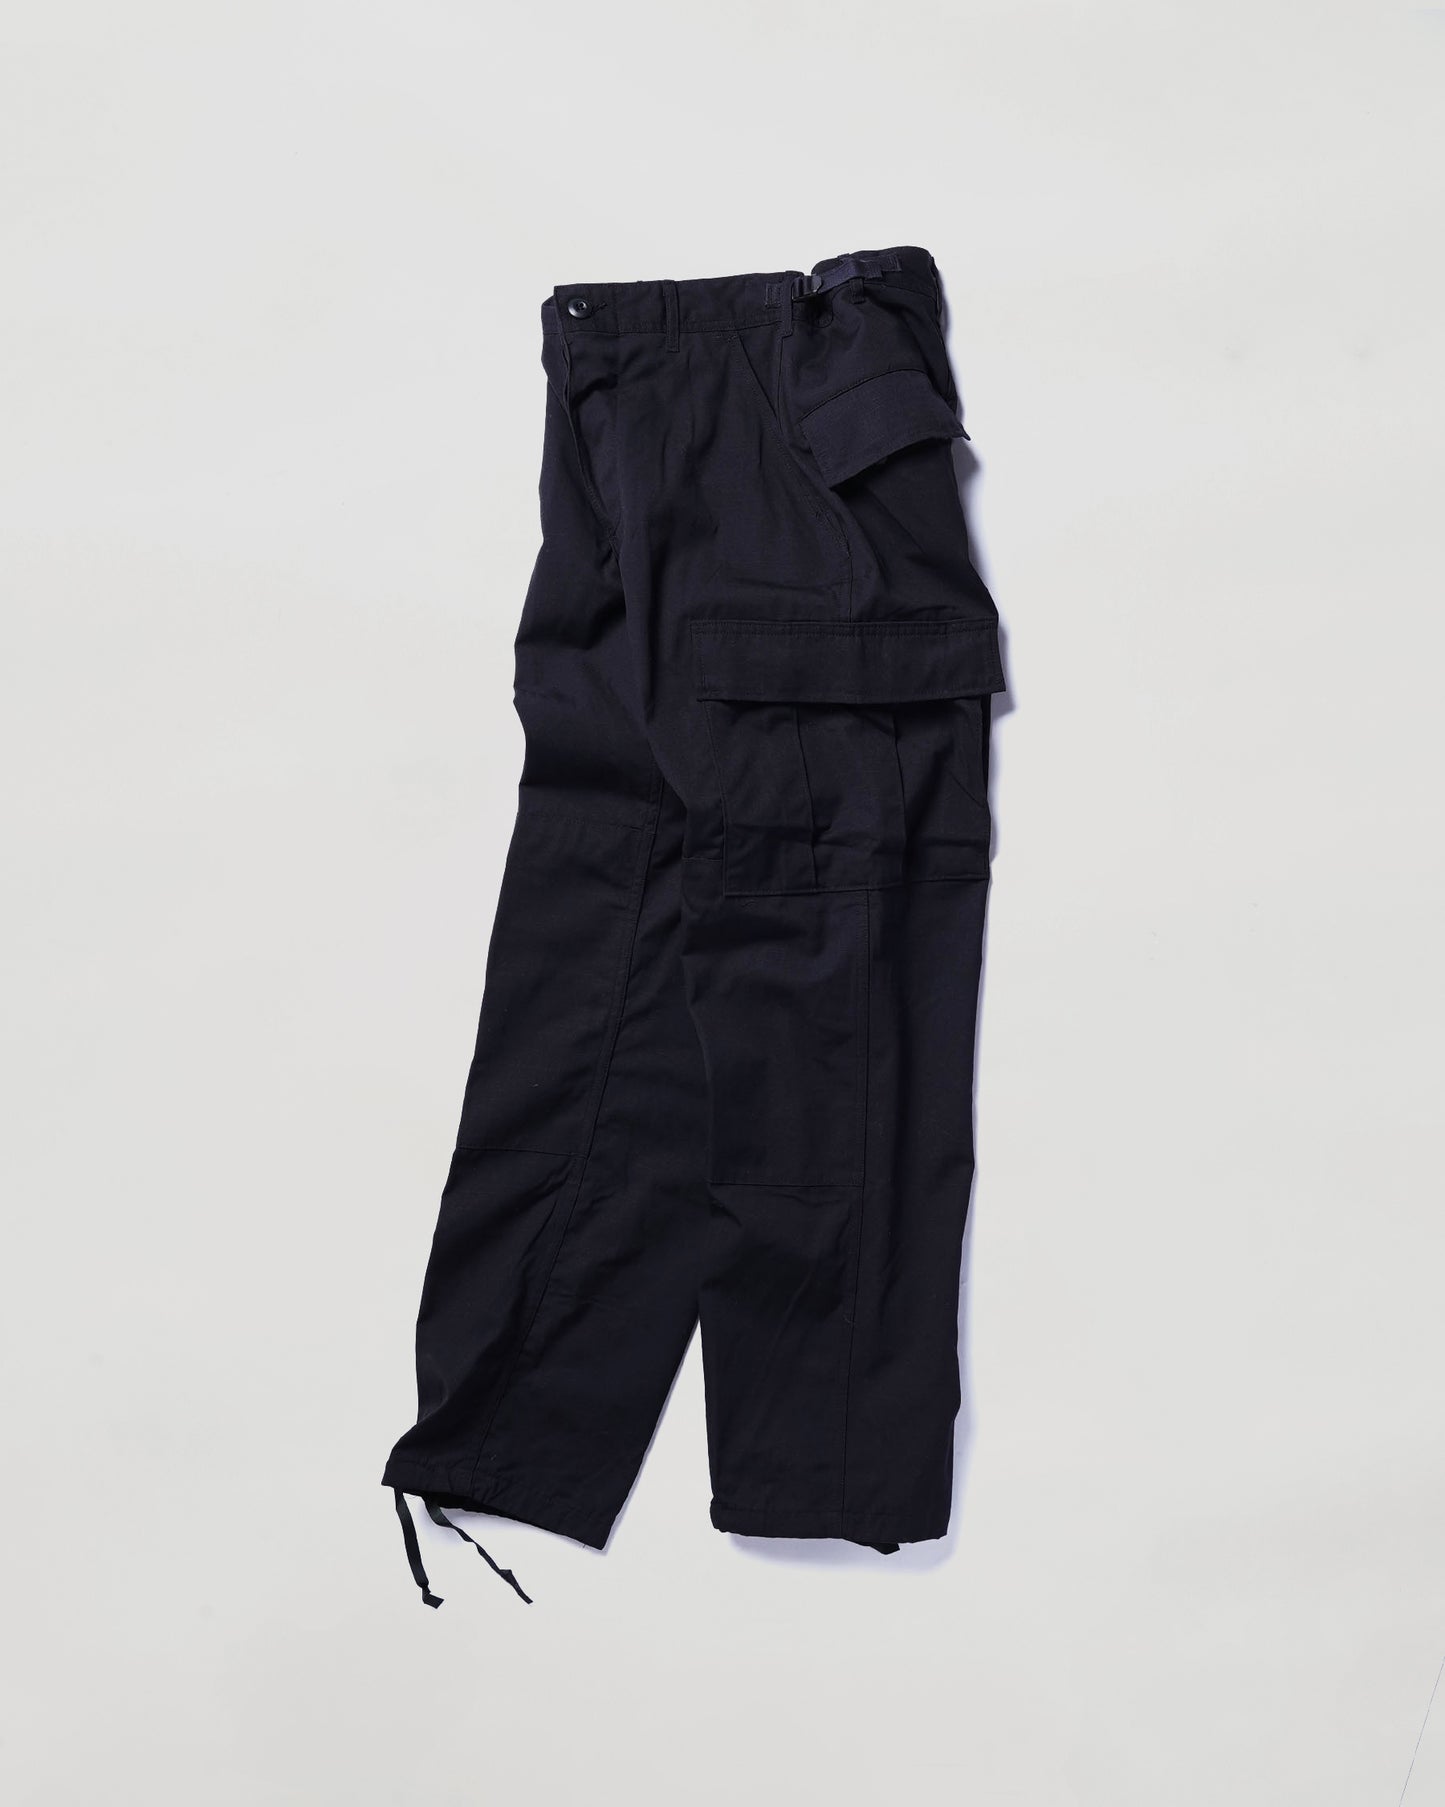 US Cotton x Poly 6 Pockets Pants Black